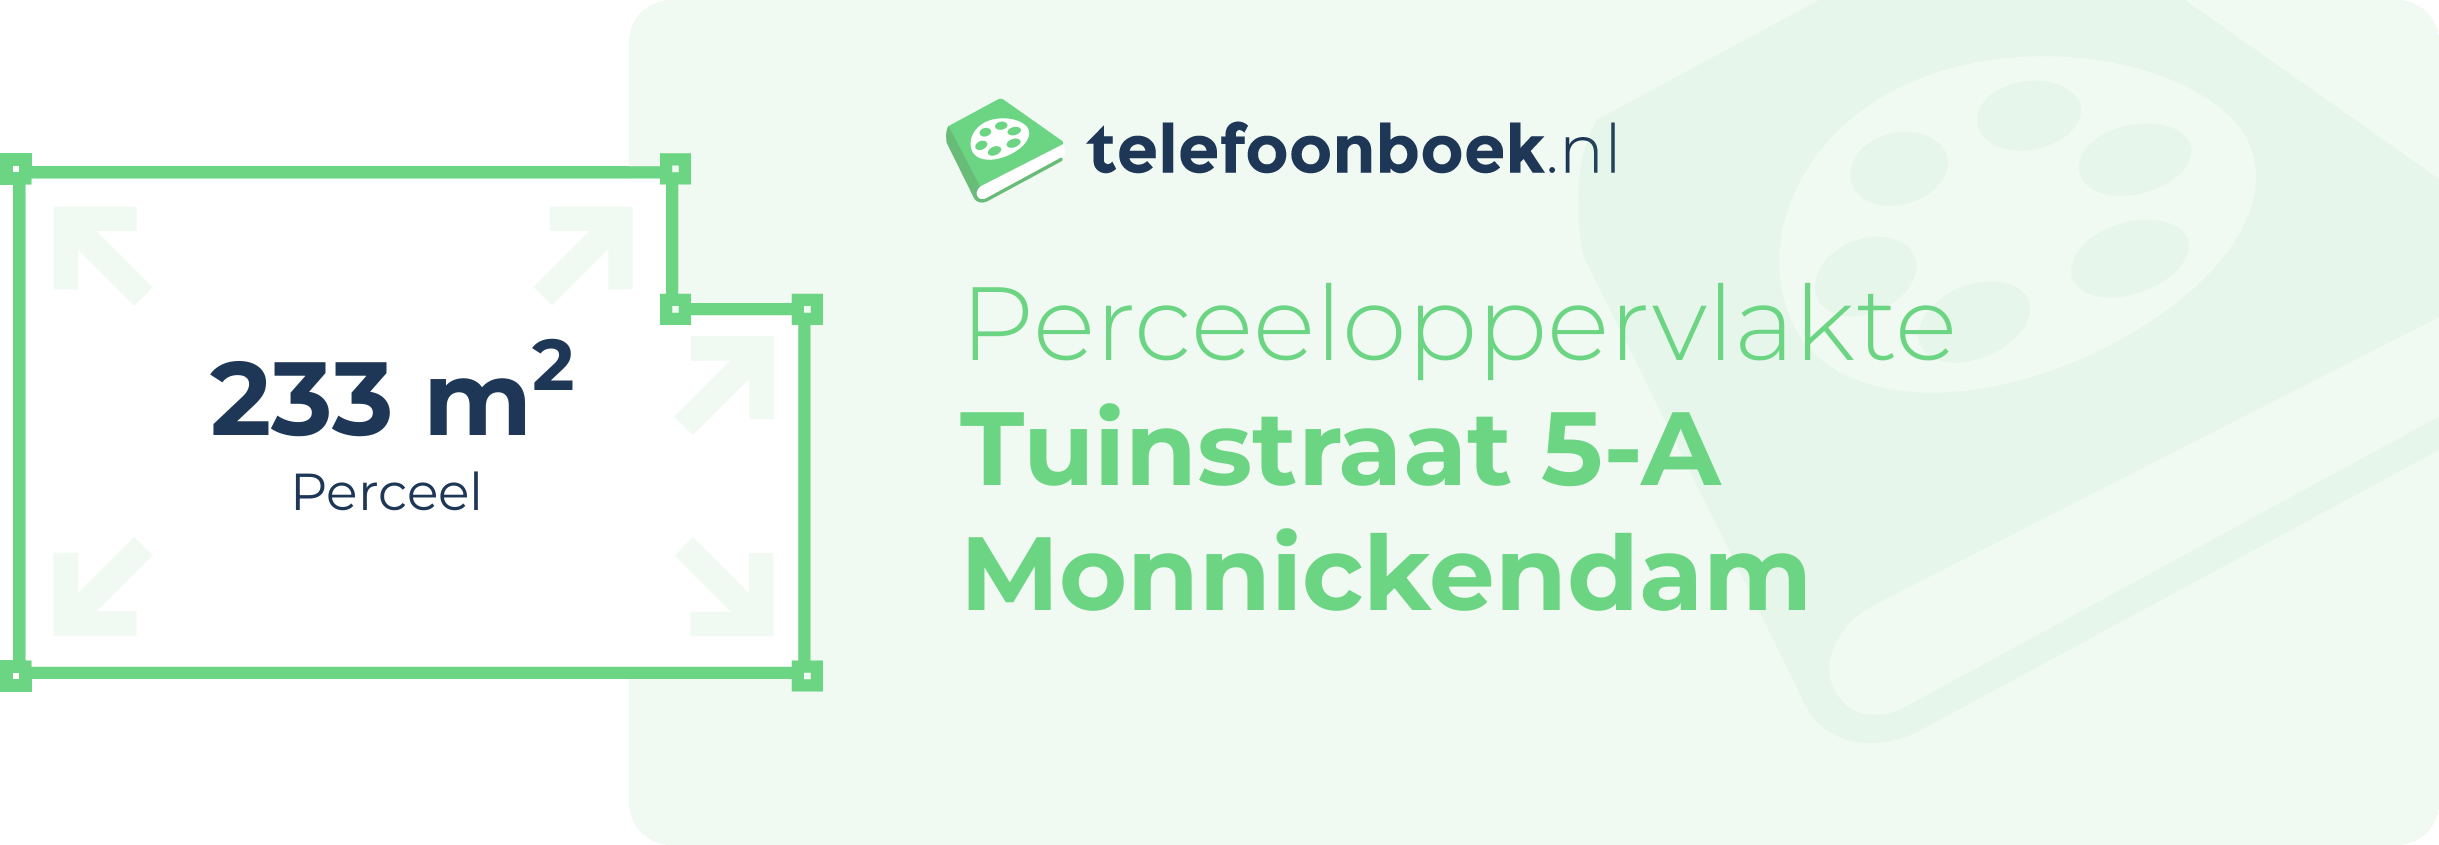 Perceeloppervlakte Tuinstraat 5-A Monnickendam